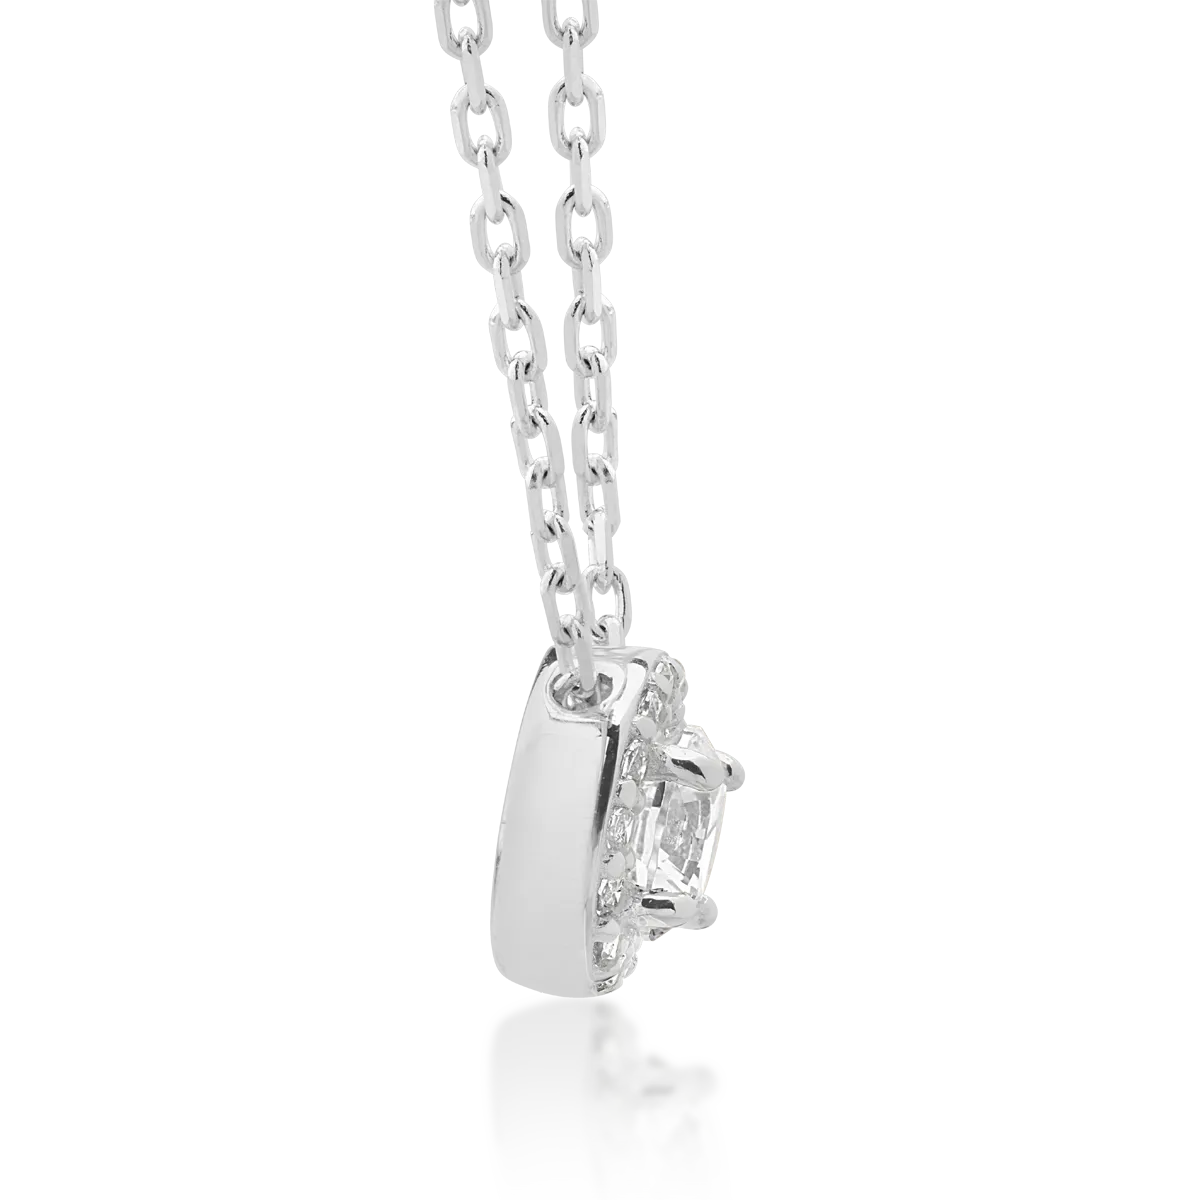 14K white gold pendant necklace